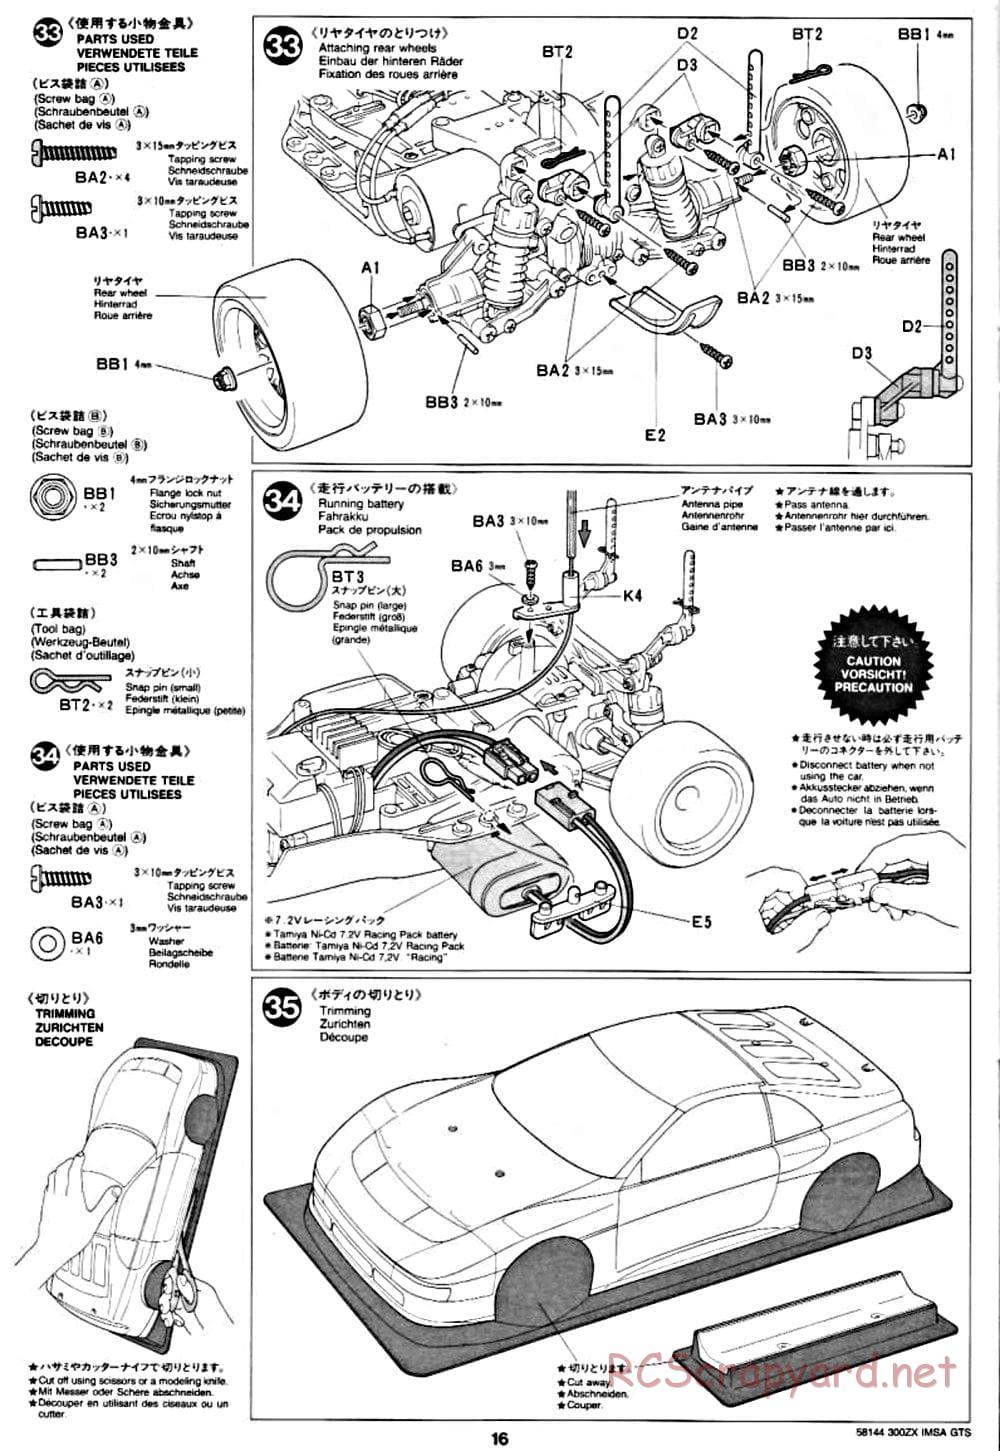 Tamiya - Nissan 300ZX IMSA-GTS - TA-02W Chassis - Manual - Page 16